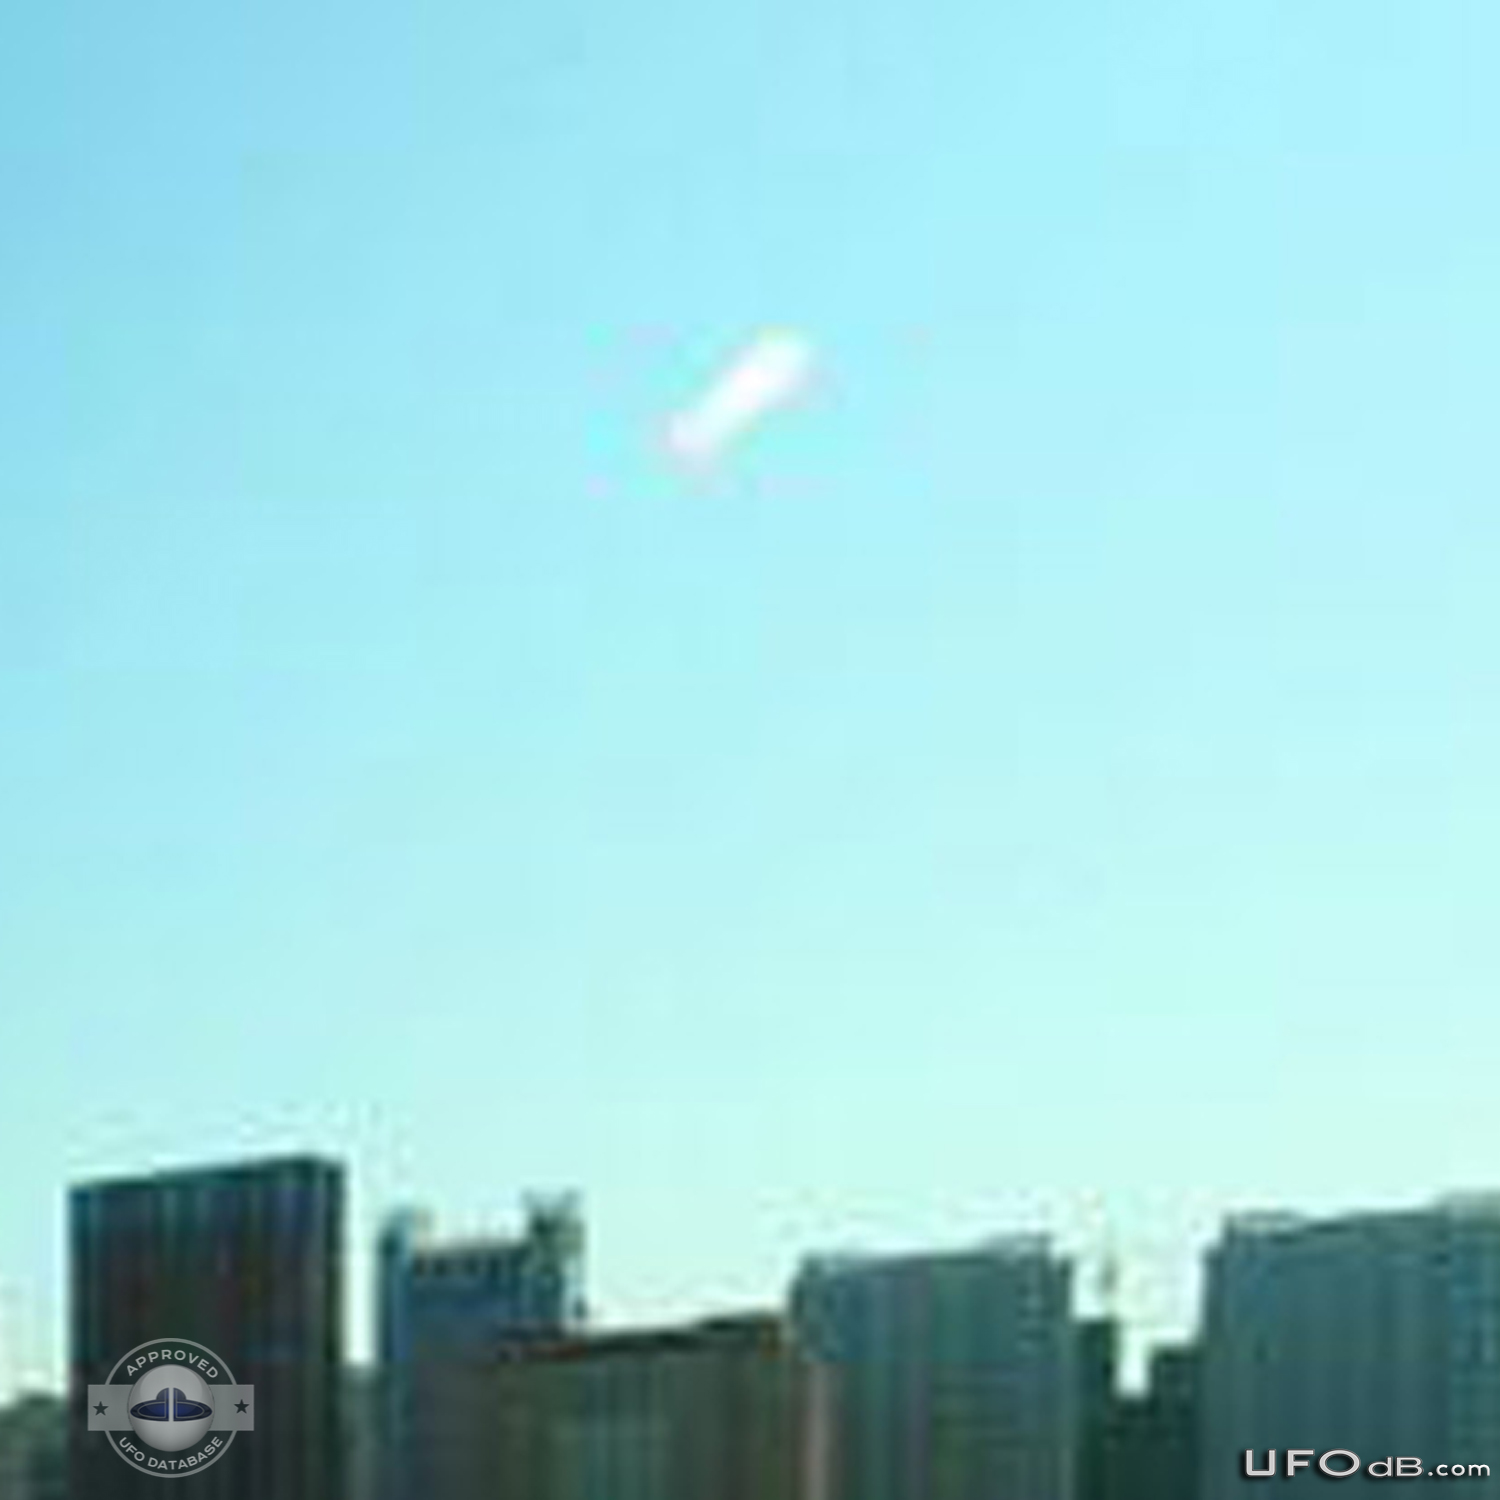 Teacher see UFO on Songhua River Bridge in Harbin, China | March 2009 UFO Picture #246-3